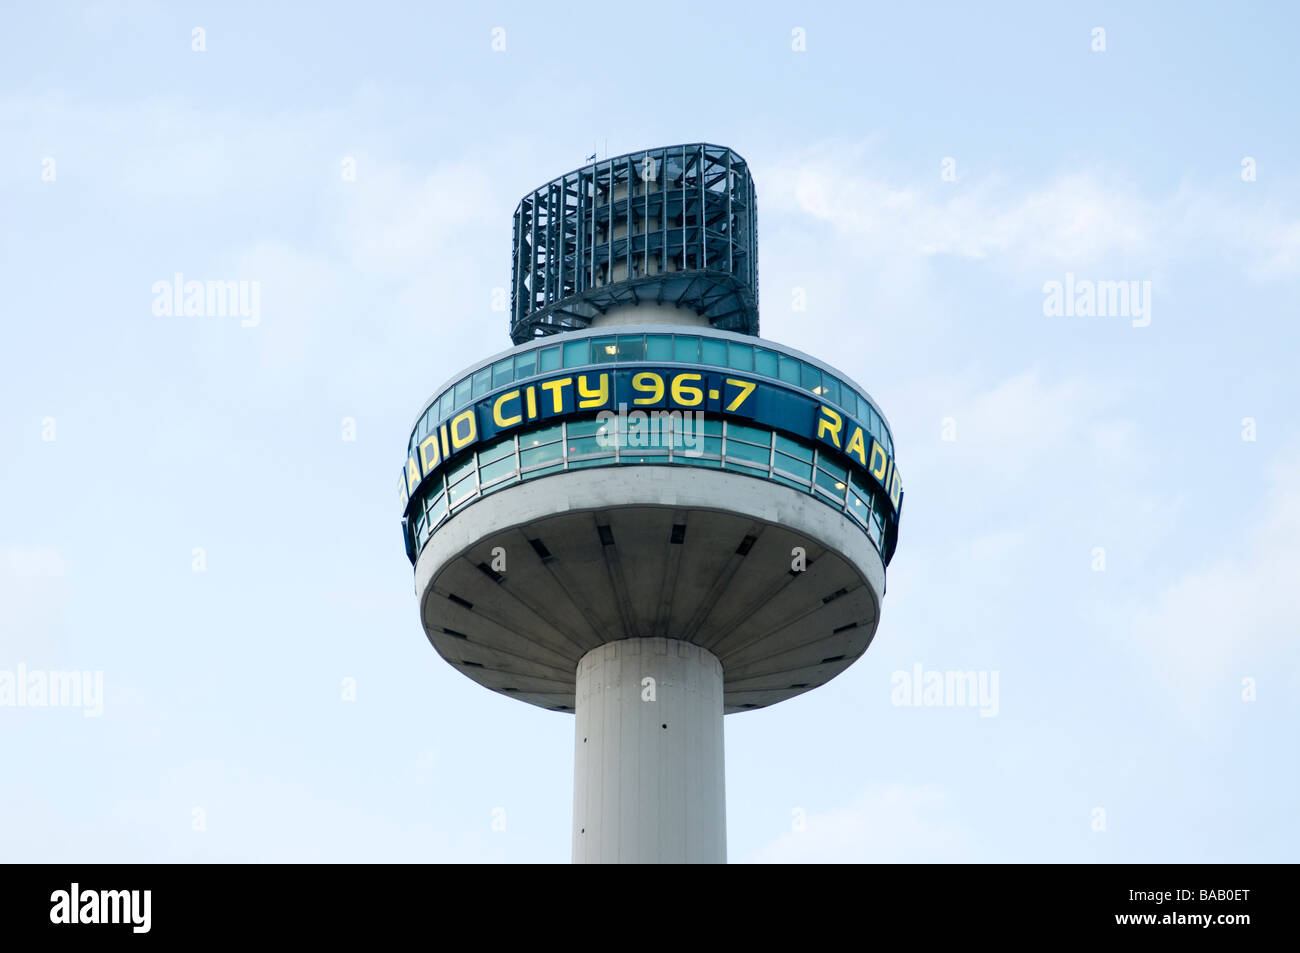 Liverpool Radio City 96.7 Tower Merseyside UK Stock Photo